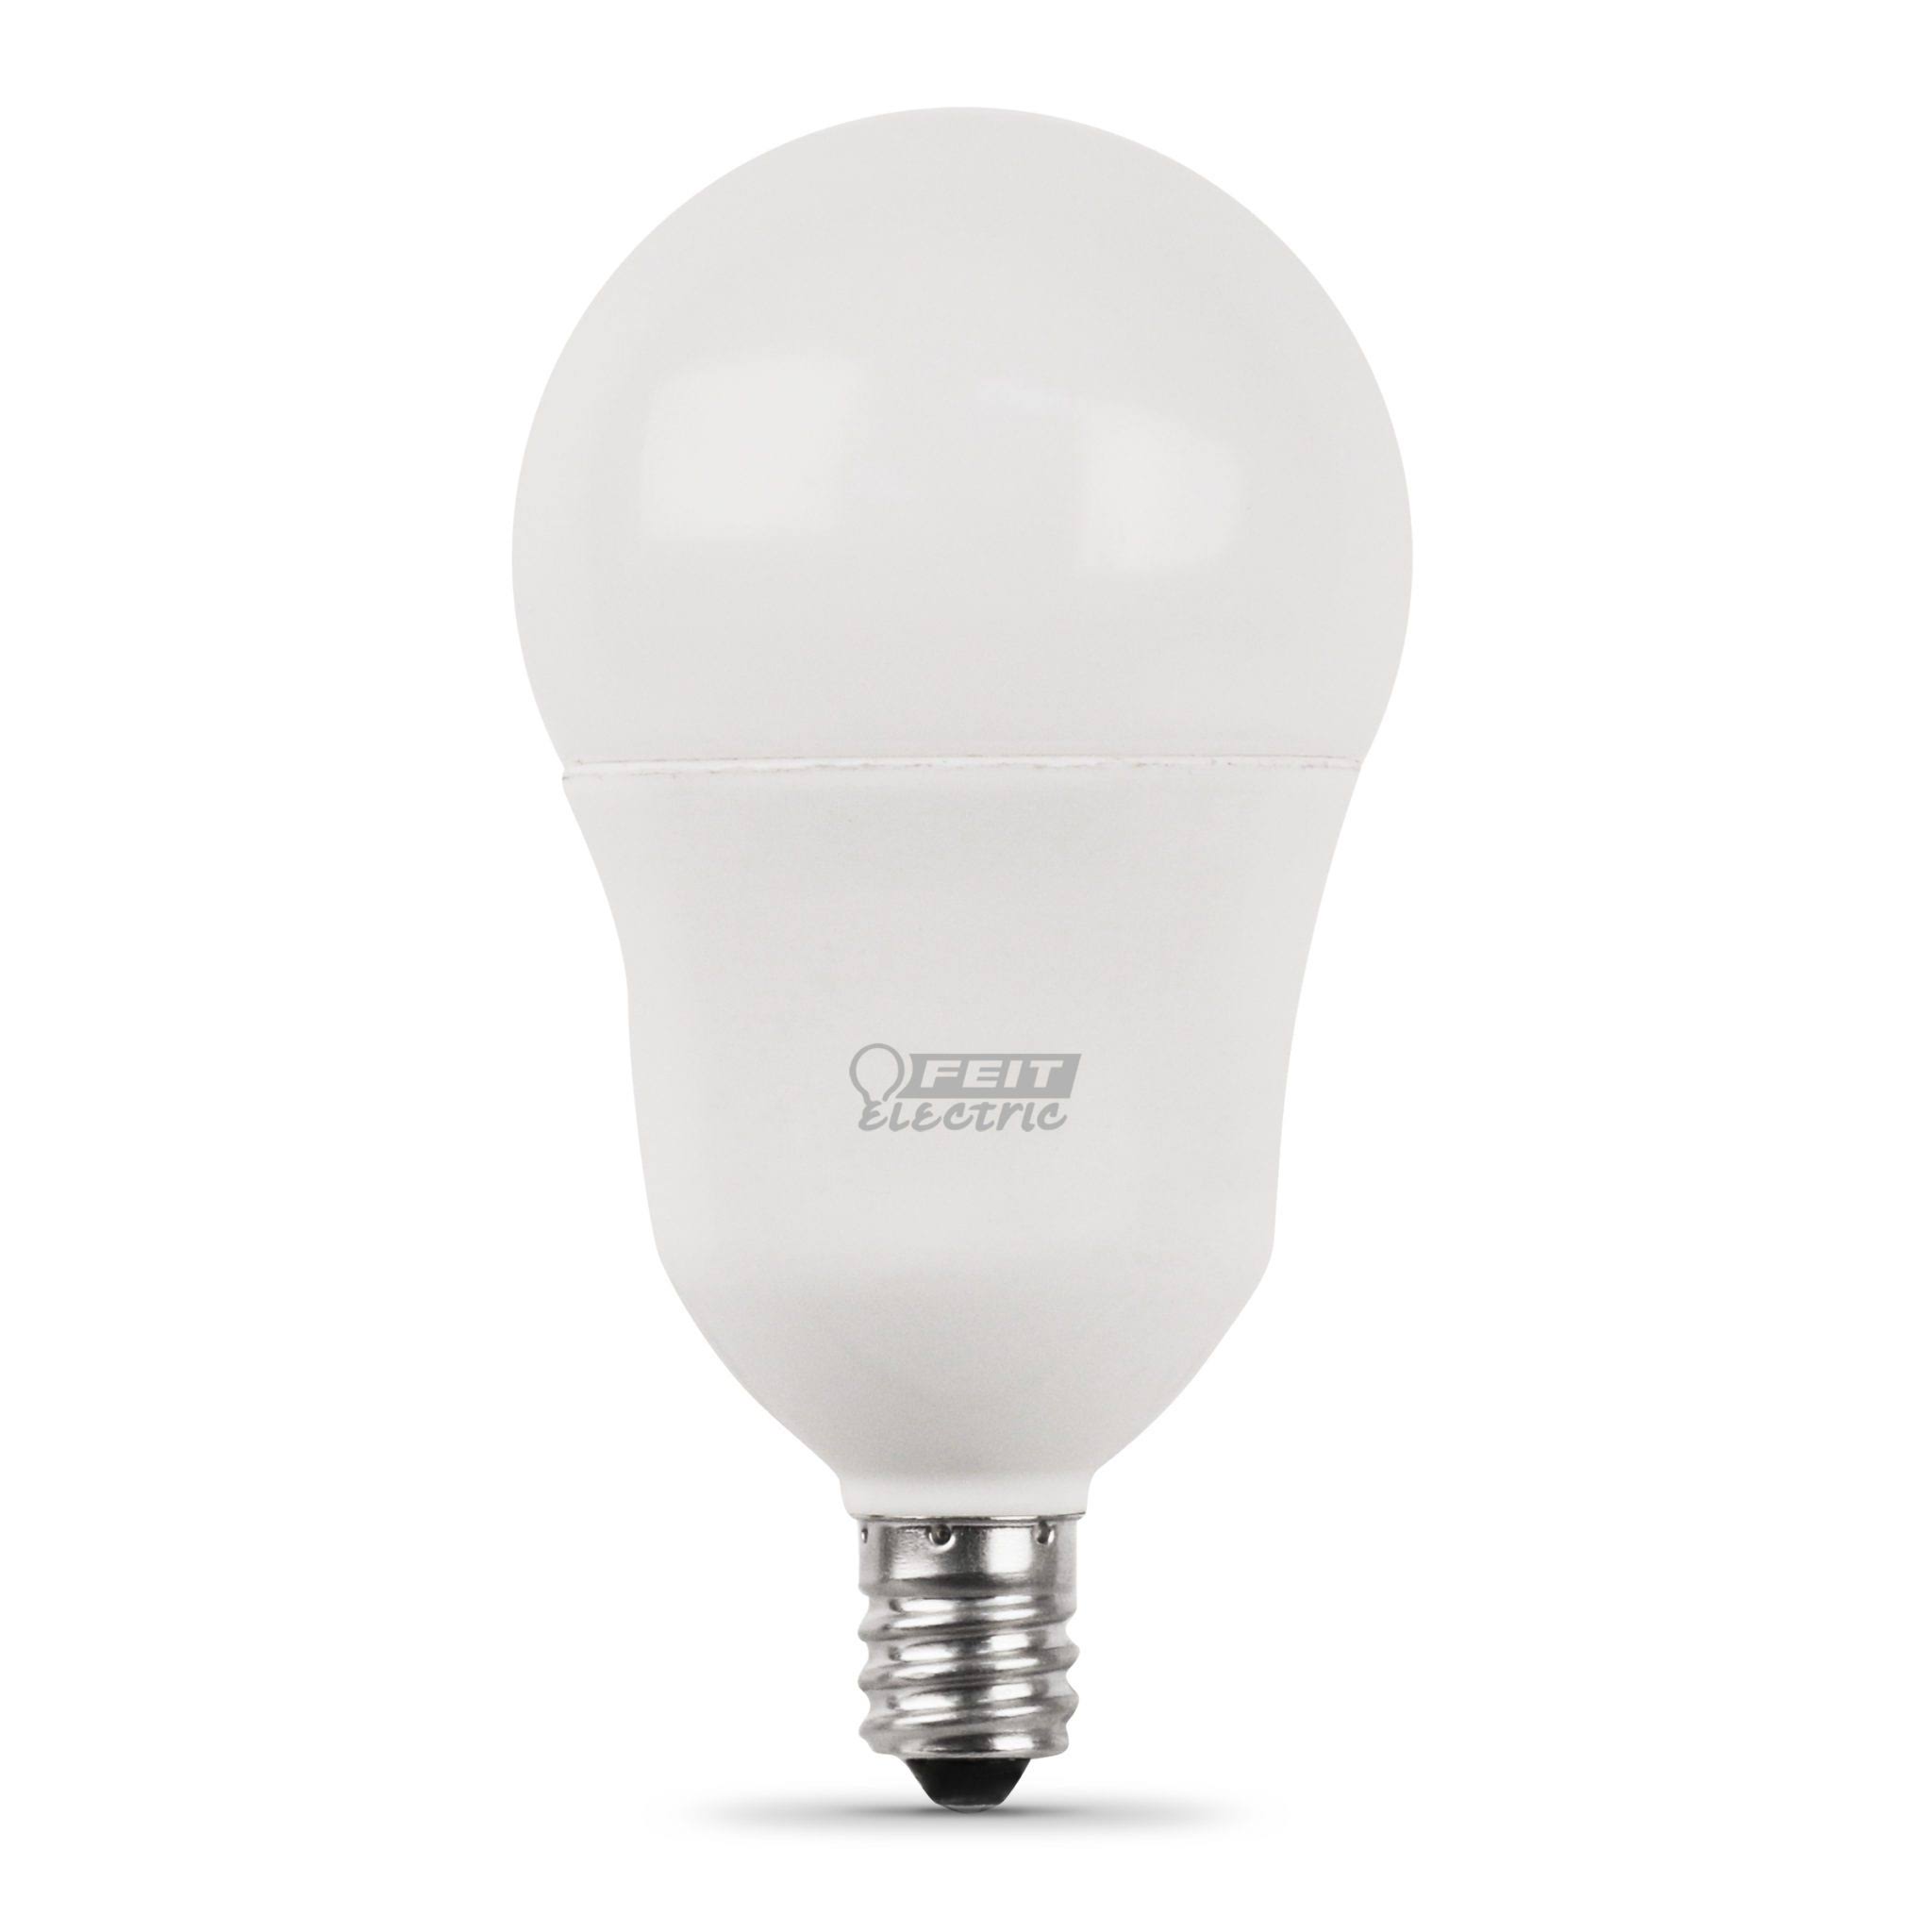 Feit Electric Enhance Light Bulbs, LED, Daylight, 8.3 Watts - 2 light bulbs